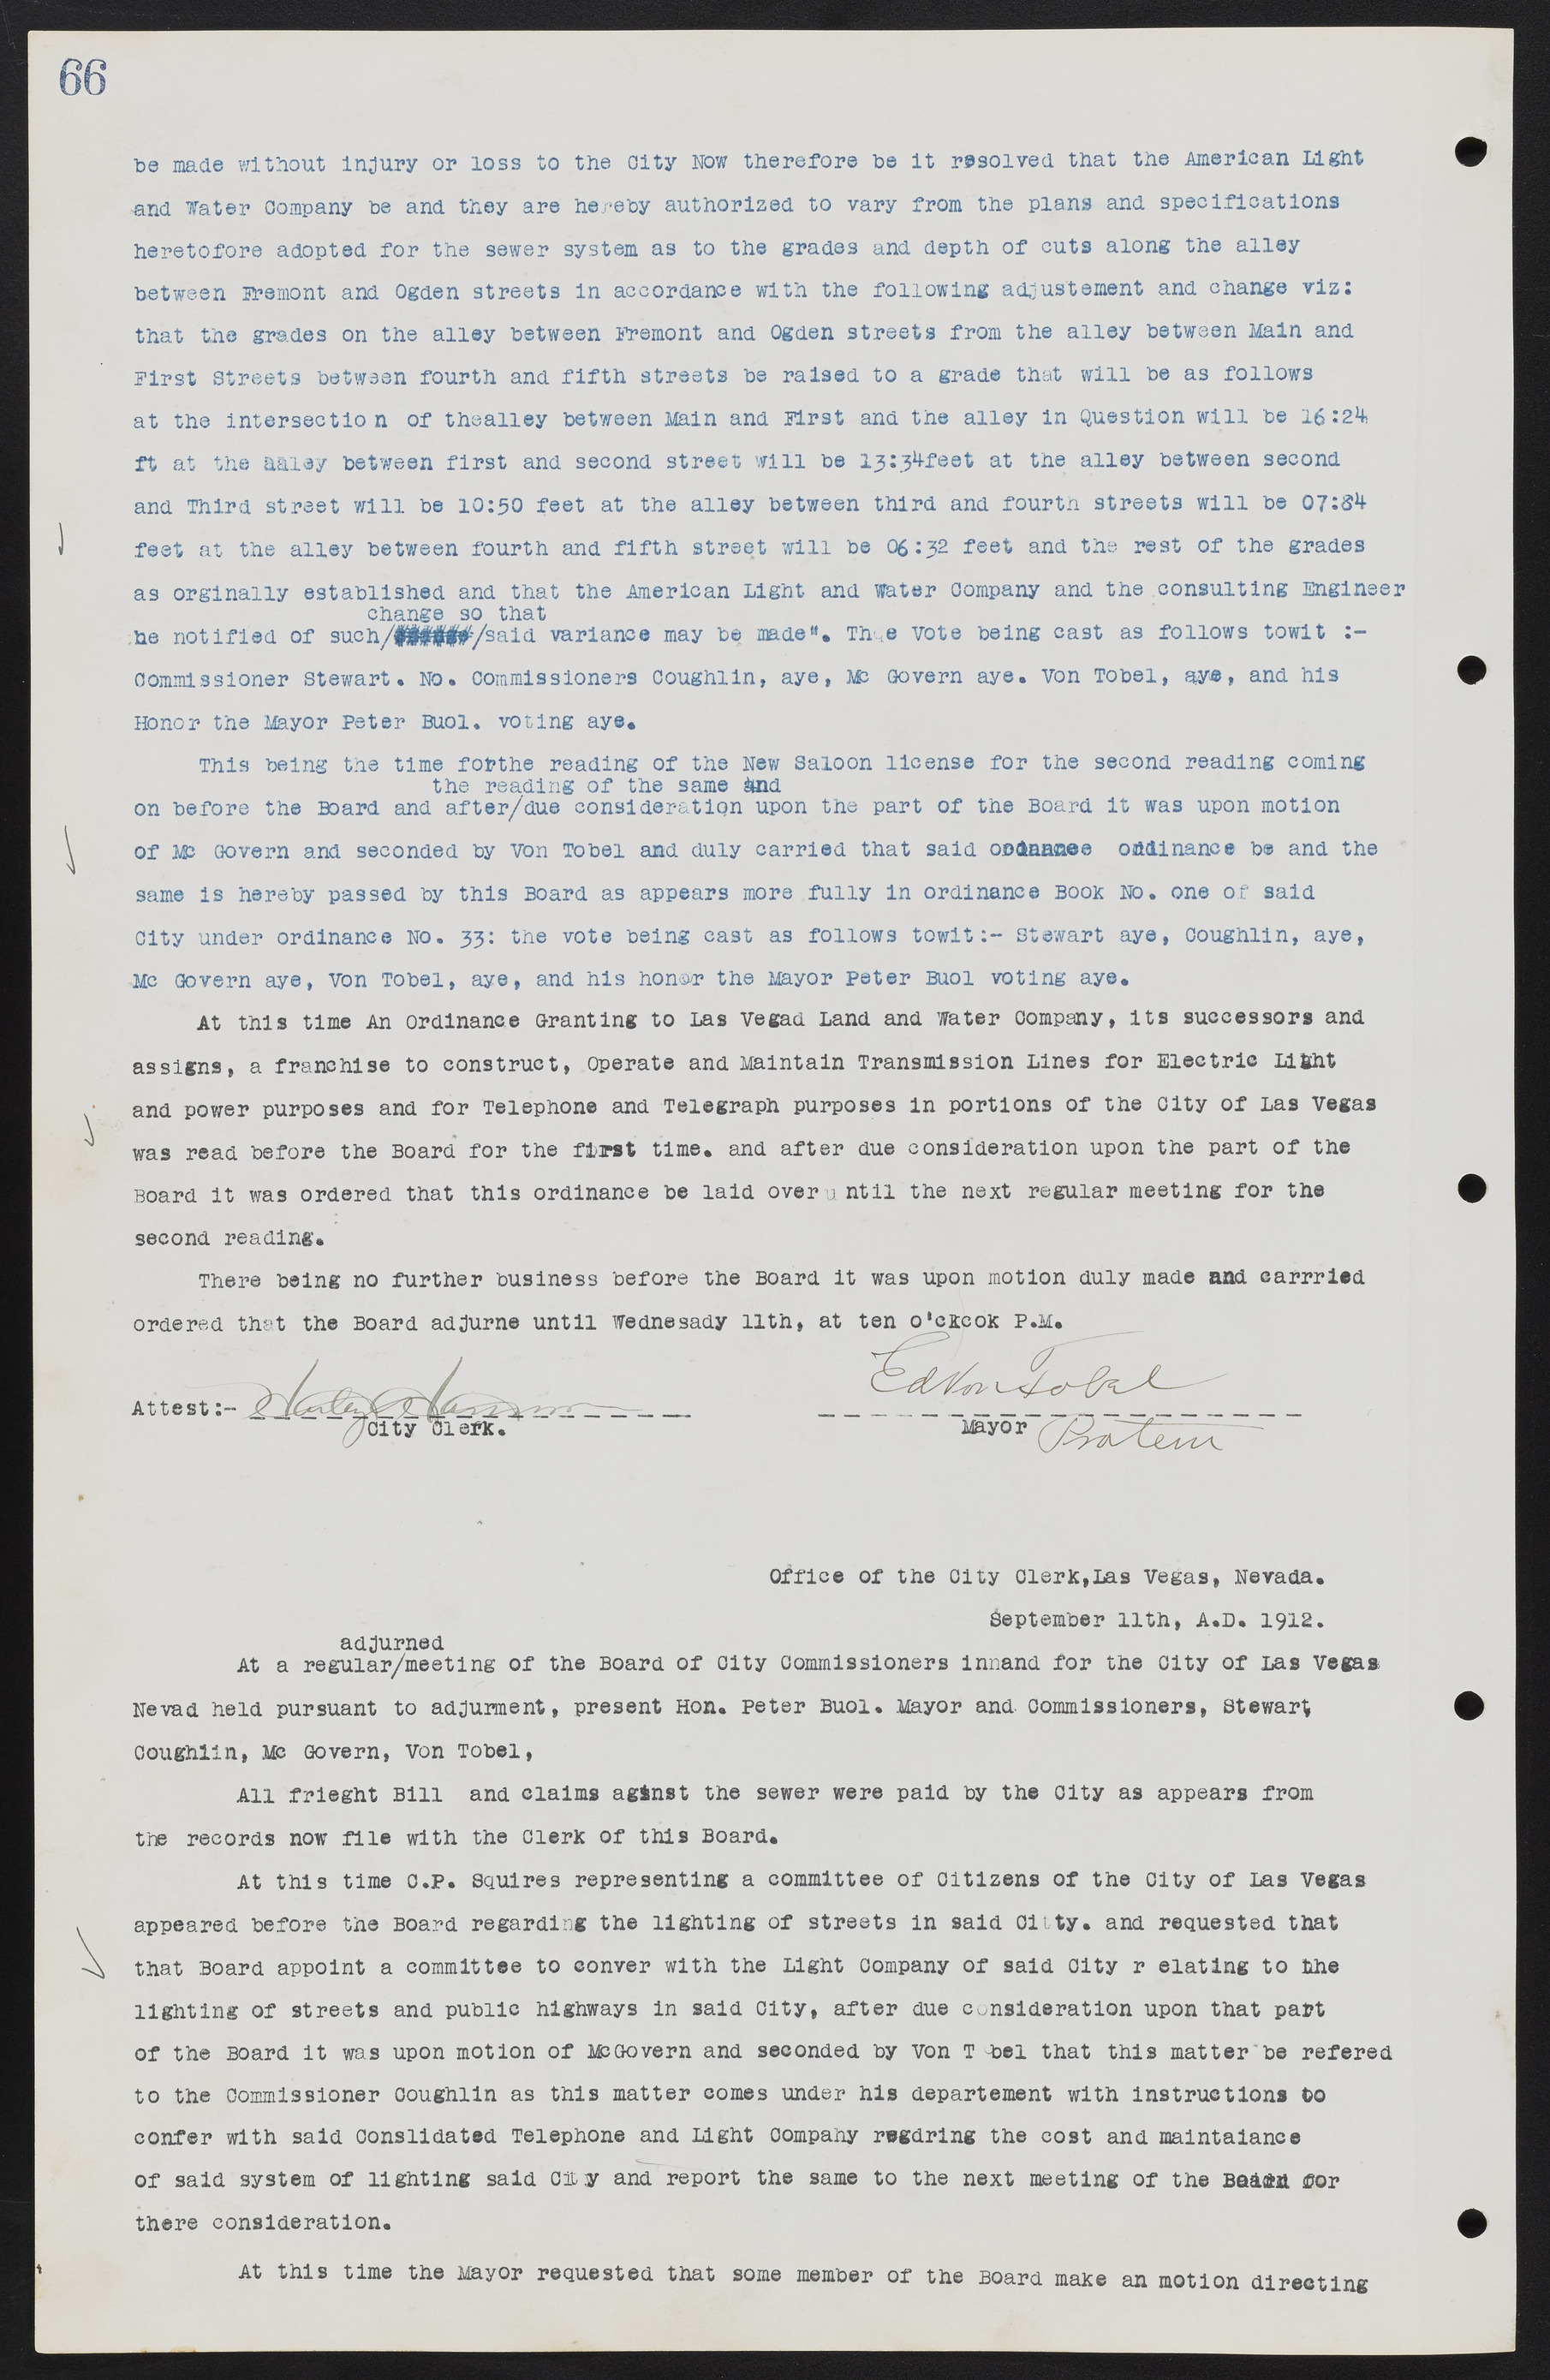 Las Vegas City Commission Minutes, June 22, 1911 to February 7, 1922, lvc000001-80